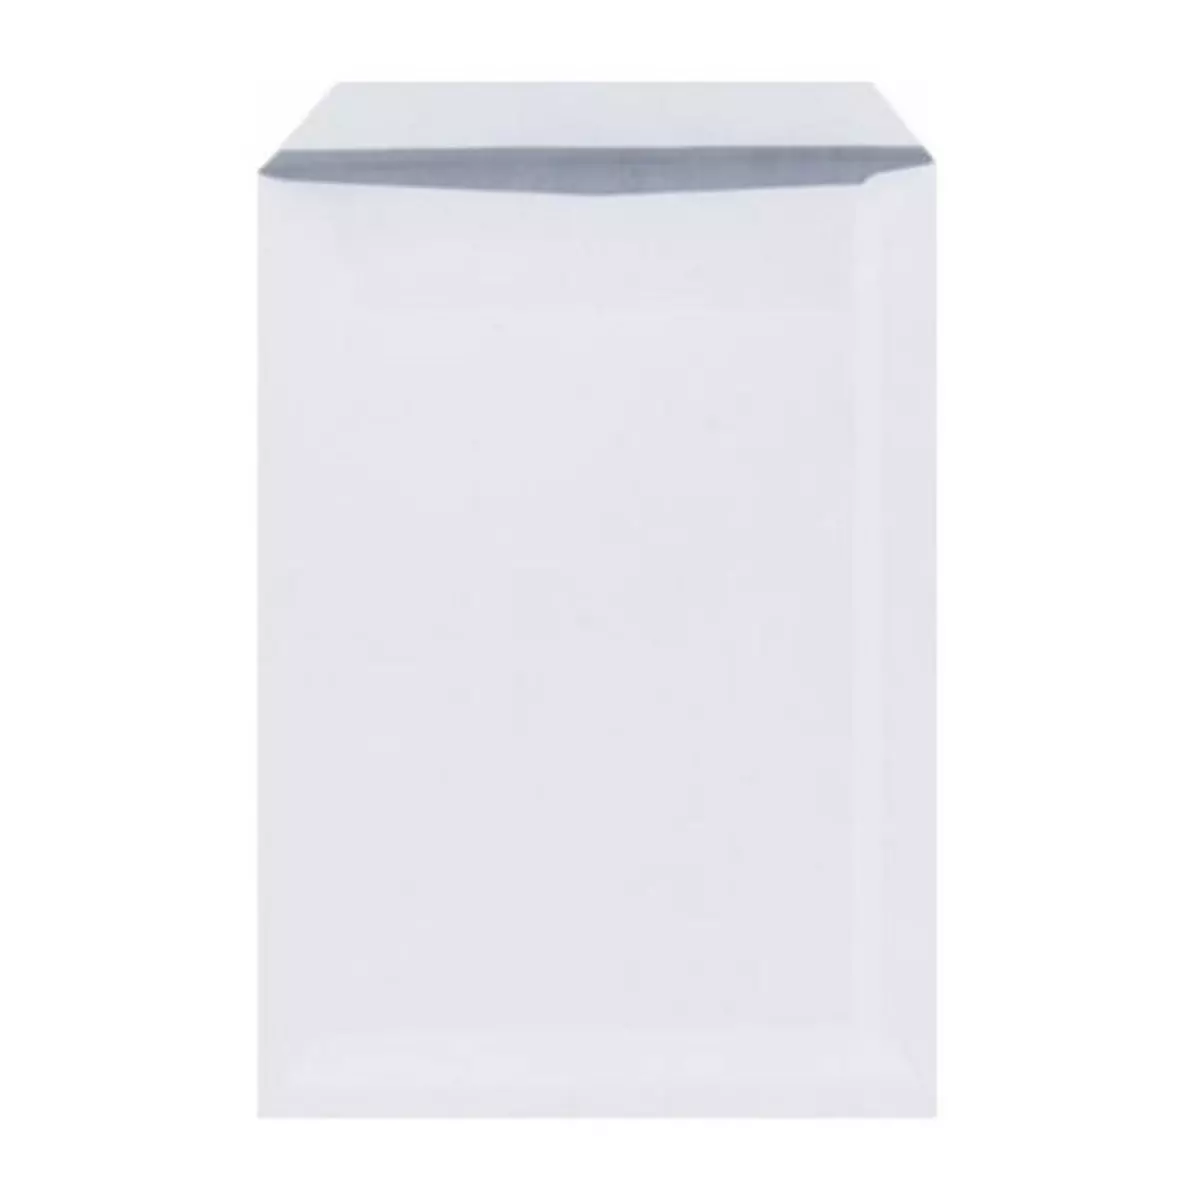 Bruneau 20 Enveloppes blanches 80 g - 16,2 x 22,9 cm